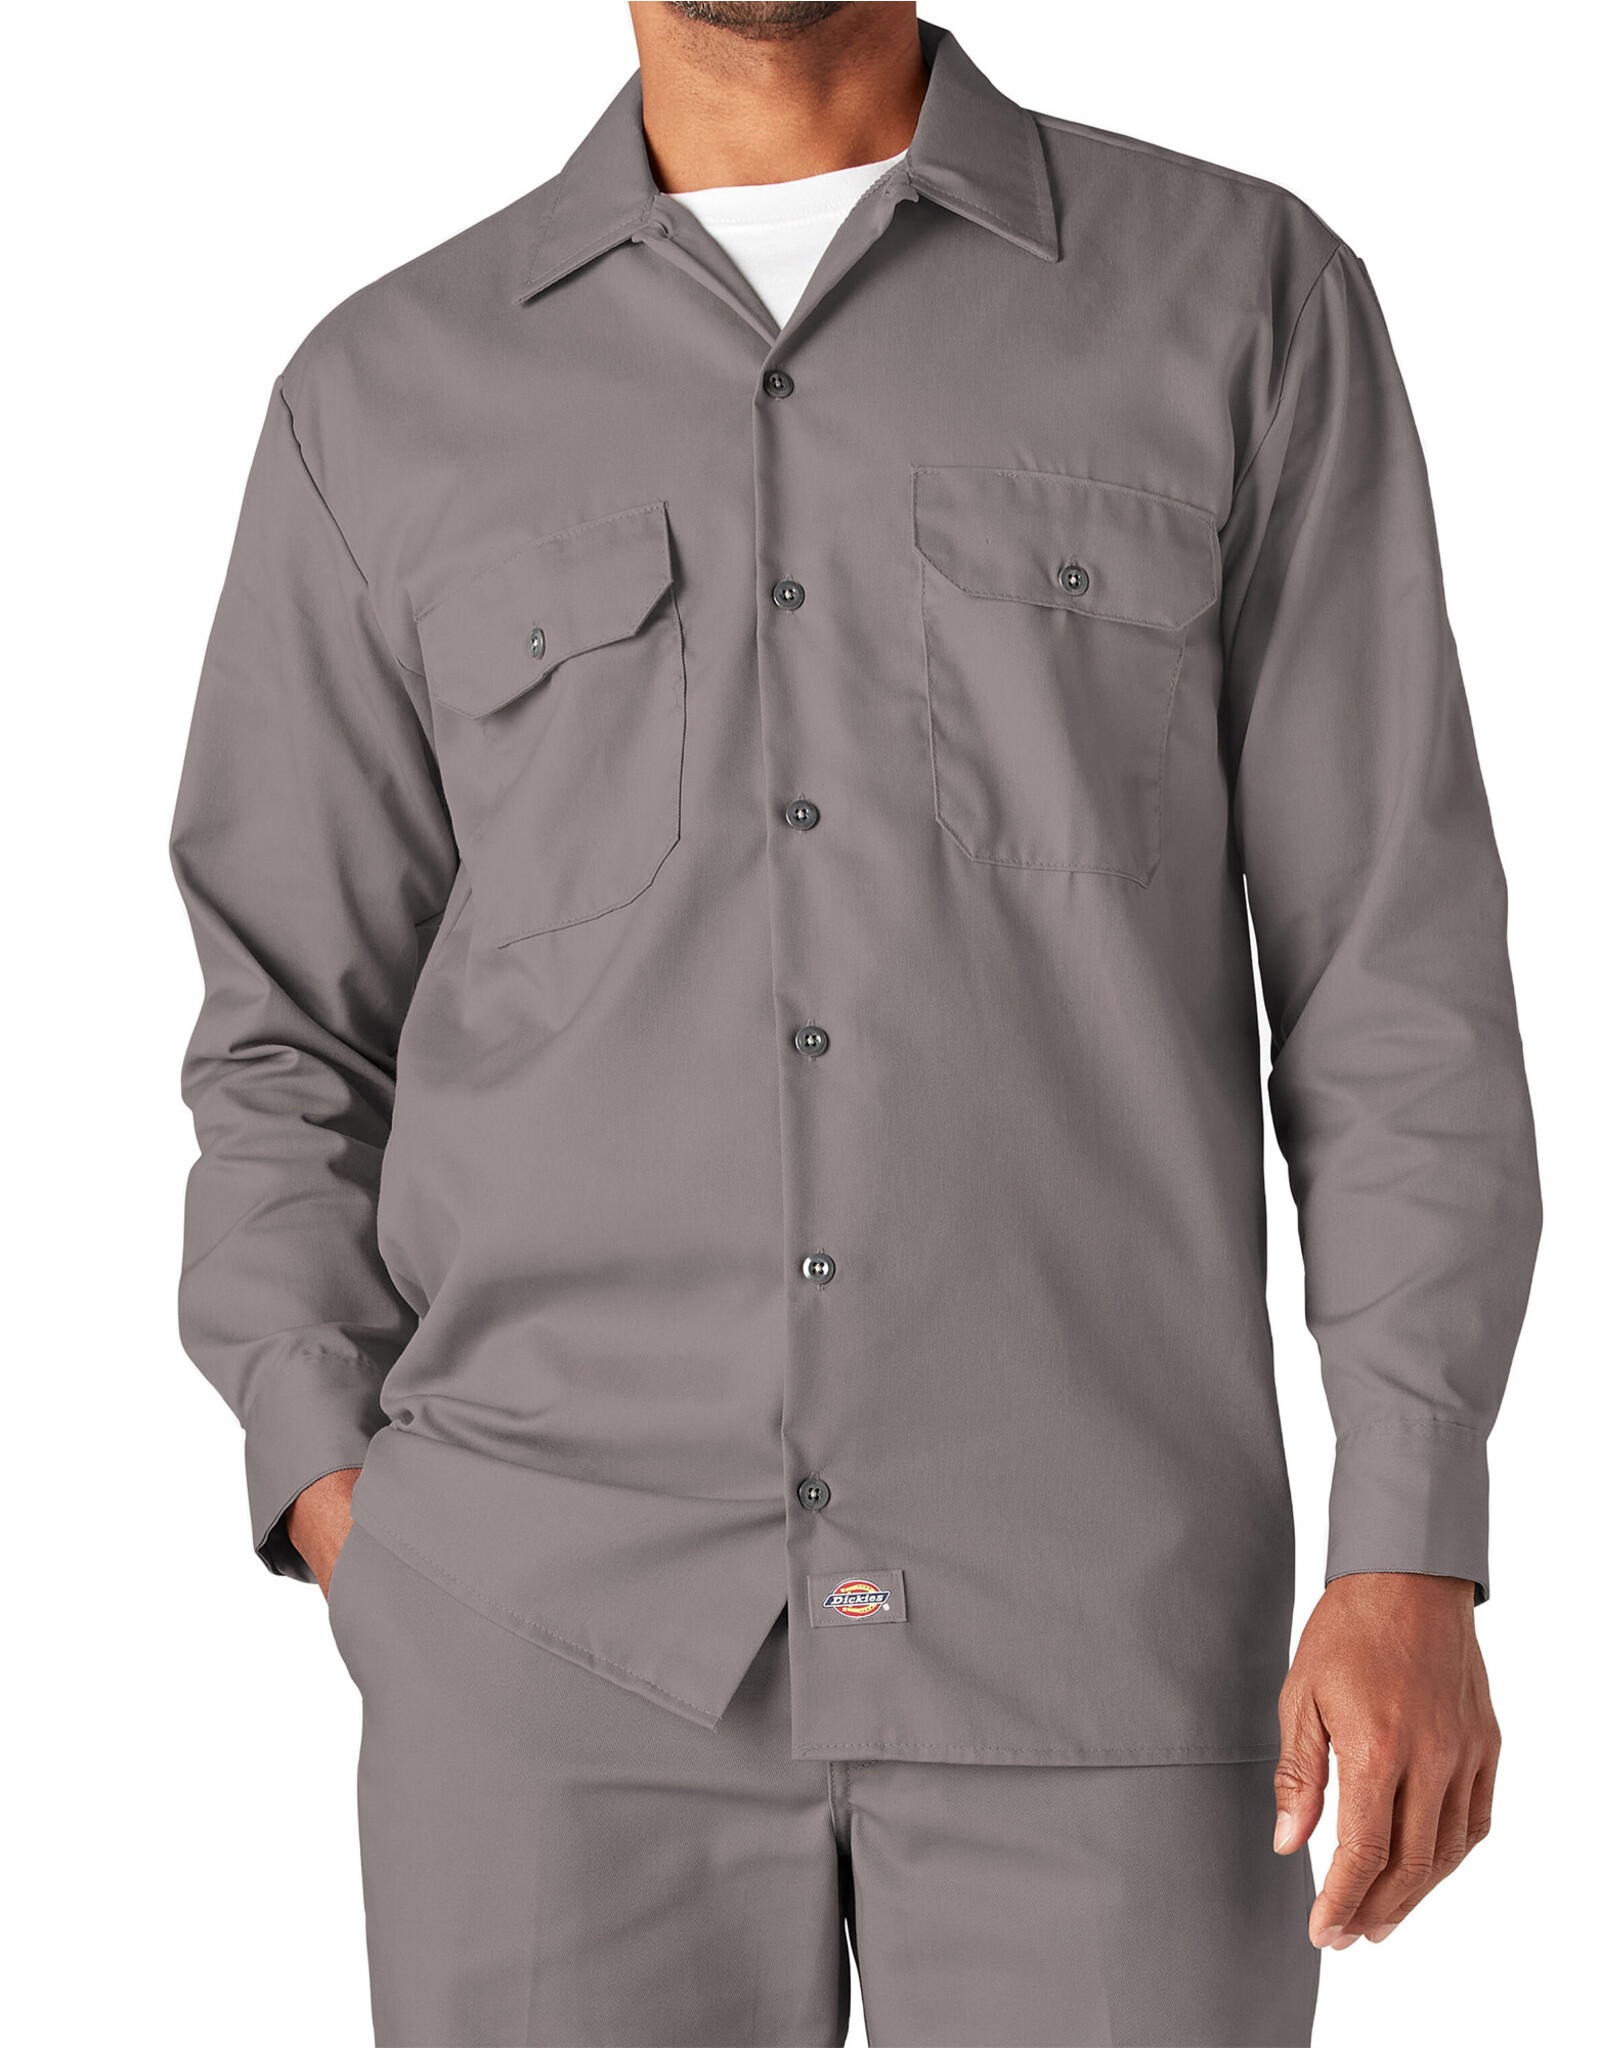 DICKIES Long Sleeve Work Shirt Silver Original Fit - 574SV